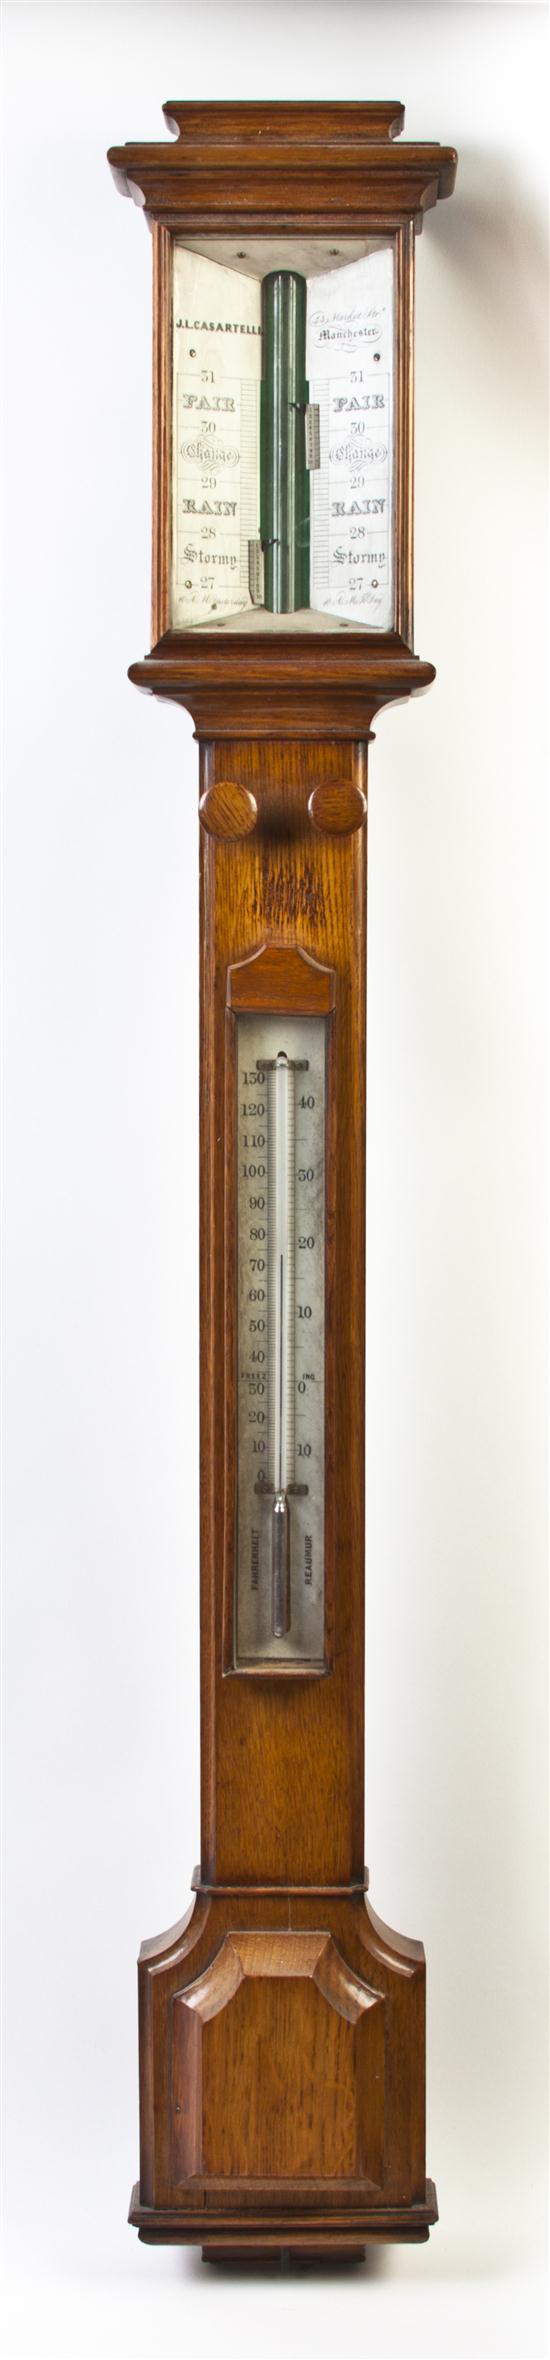 An English Stick Barometer J. Casartelli